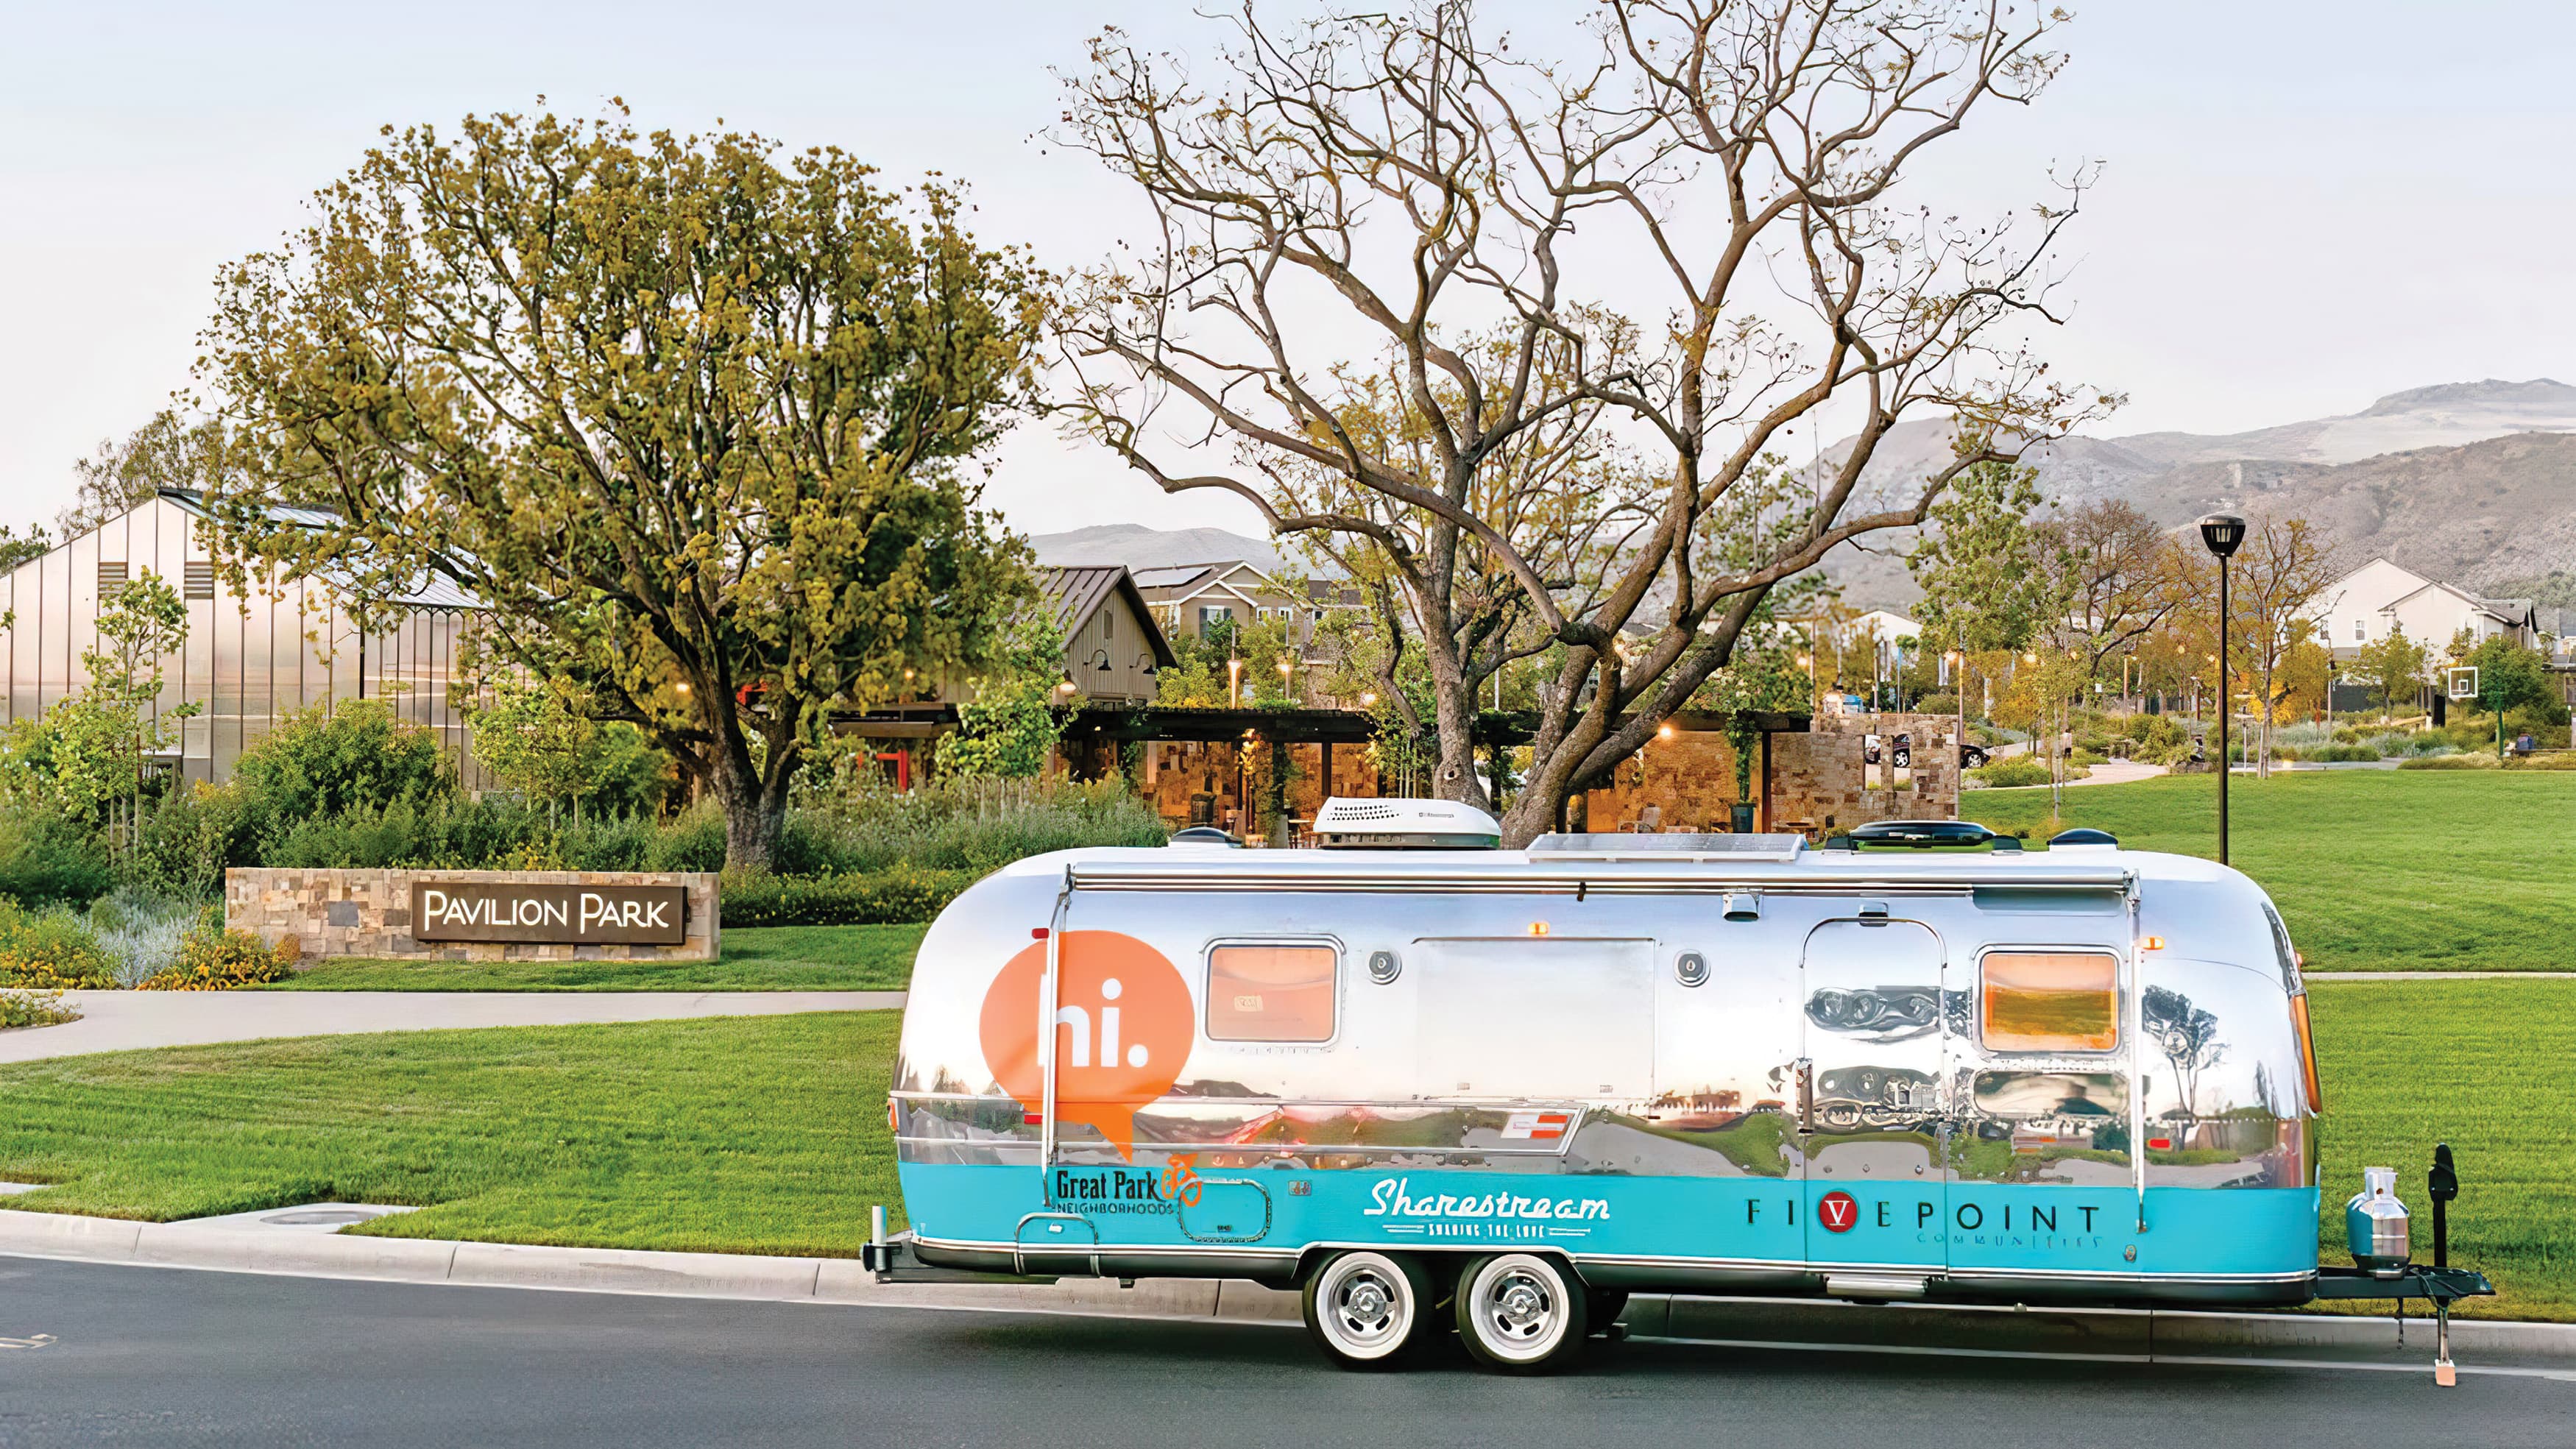 Retro Airstream with FivePoint Communities and Great Park Neighborhoods branding decals.